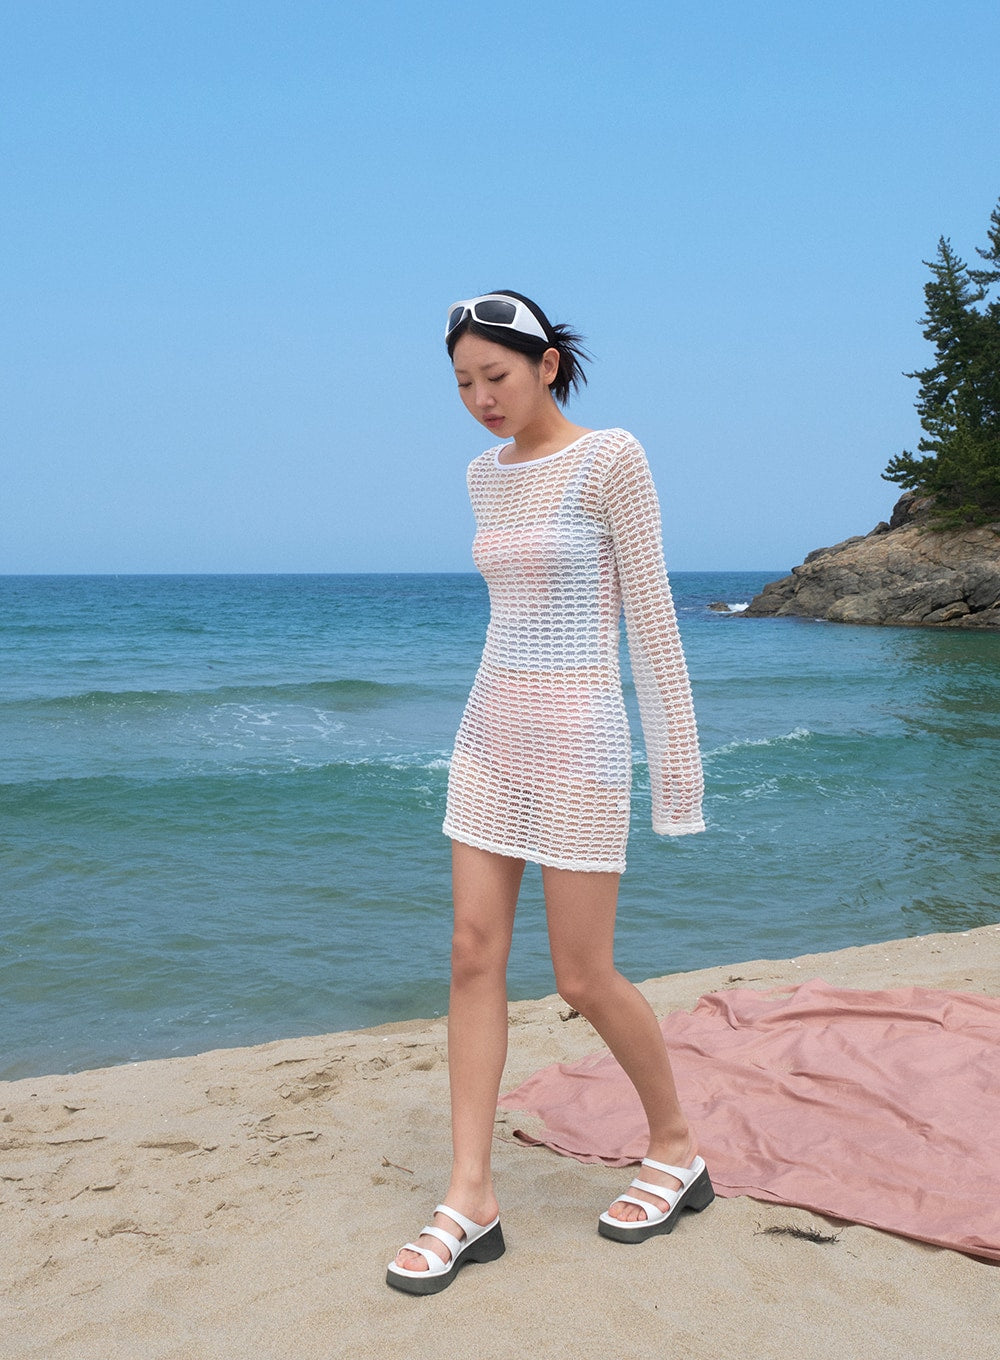 Navy Fishnet Dress - Daring and Bold Mesh Cover Up